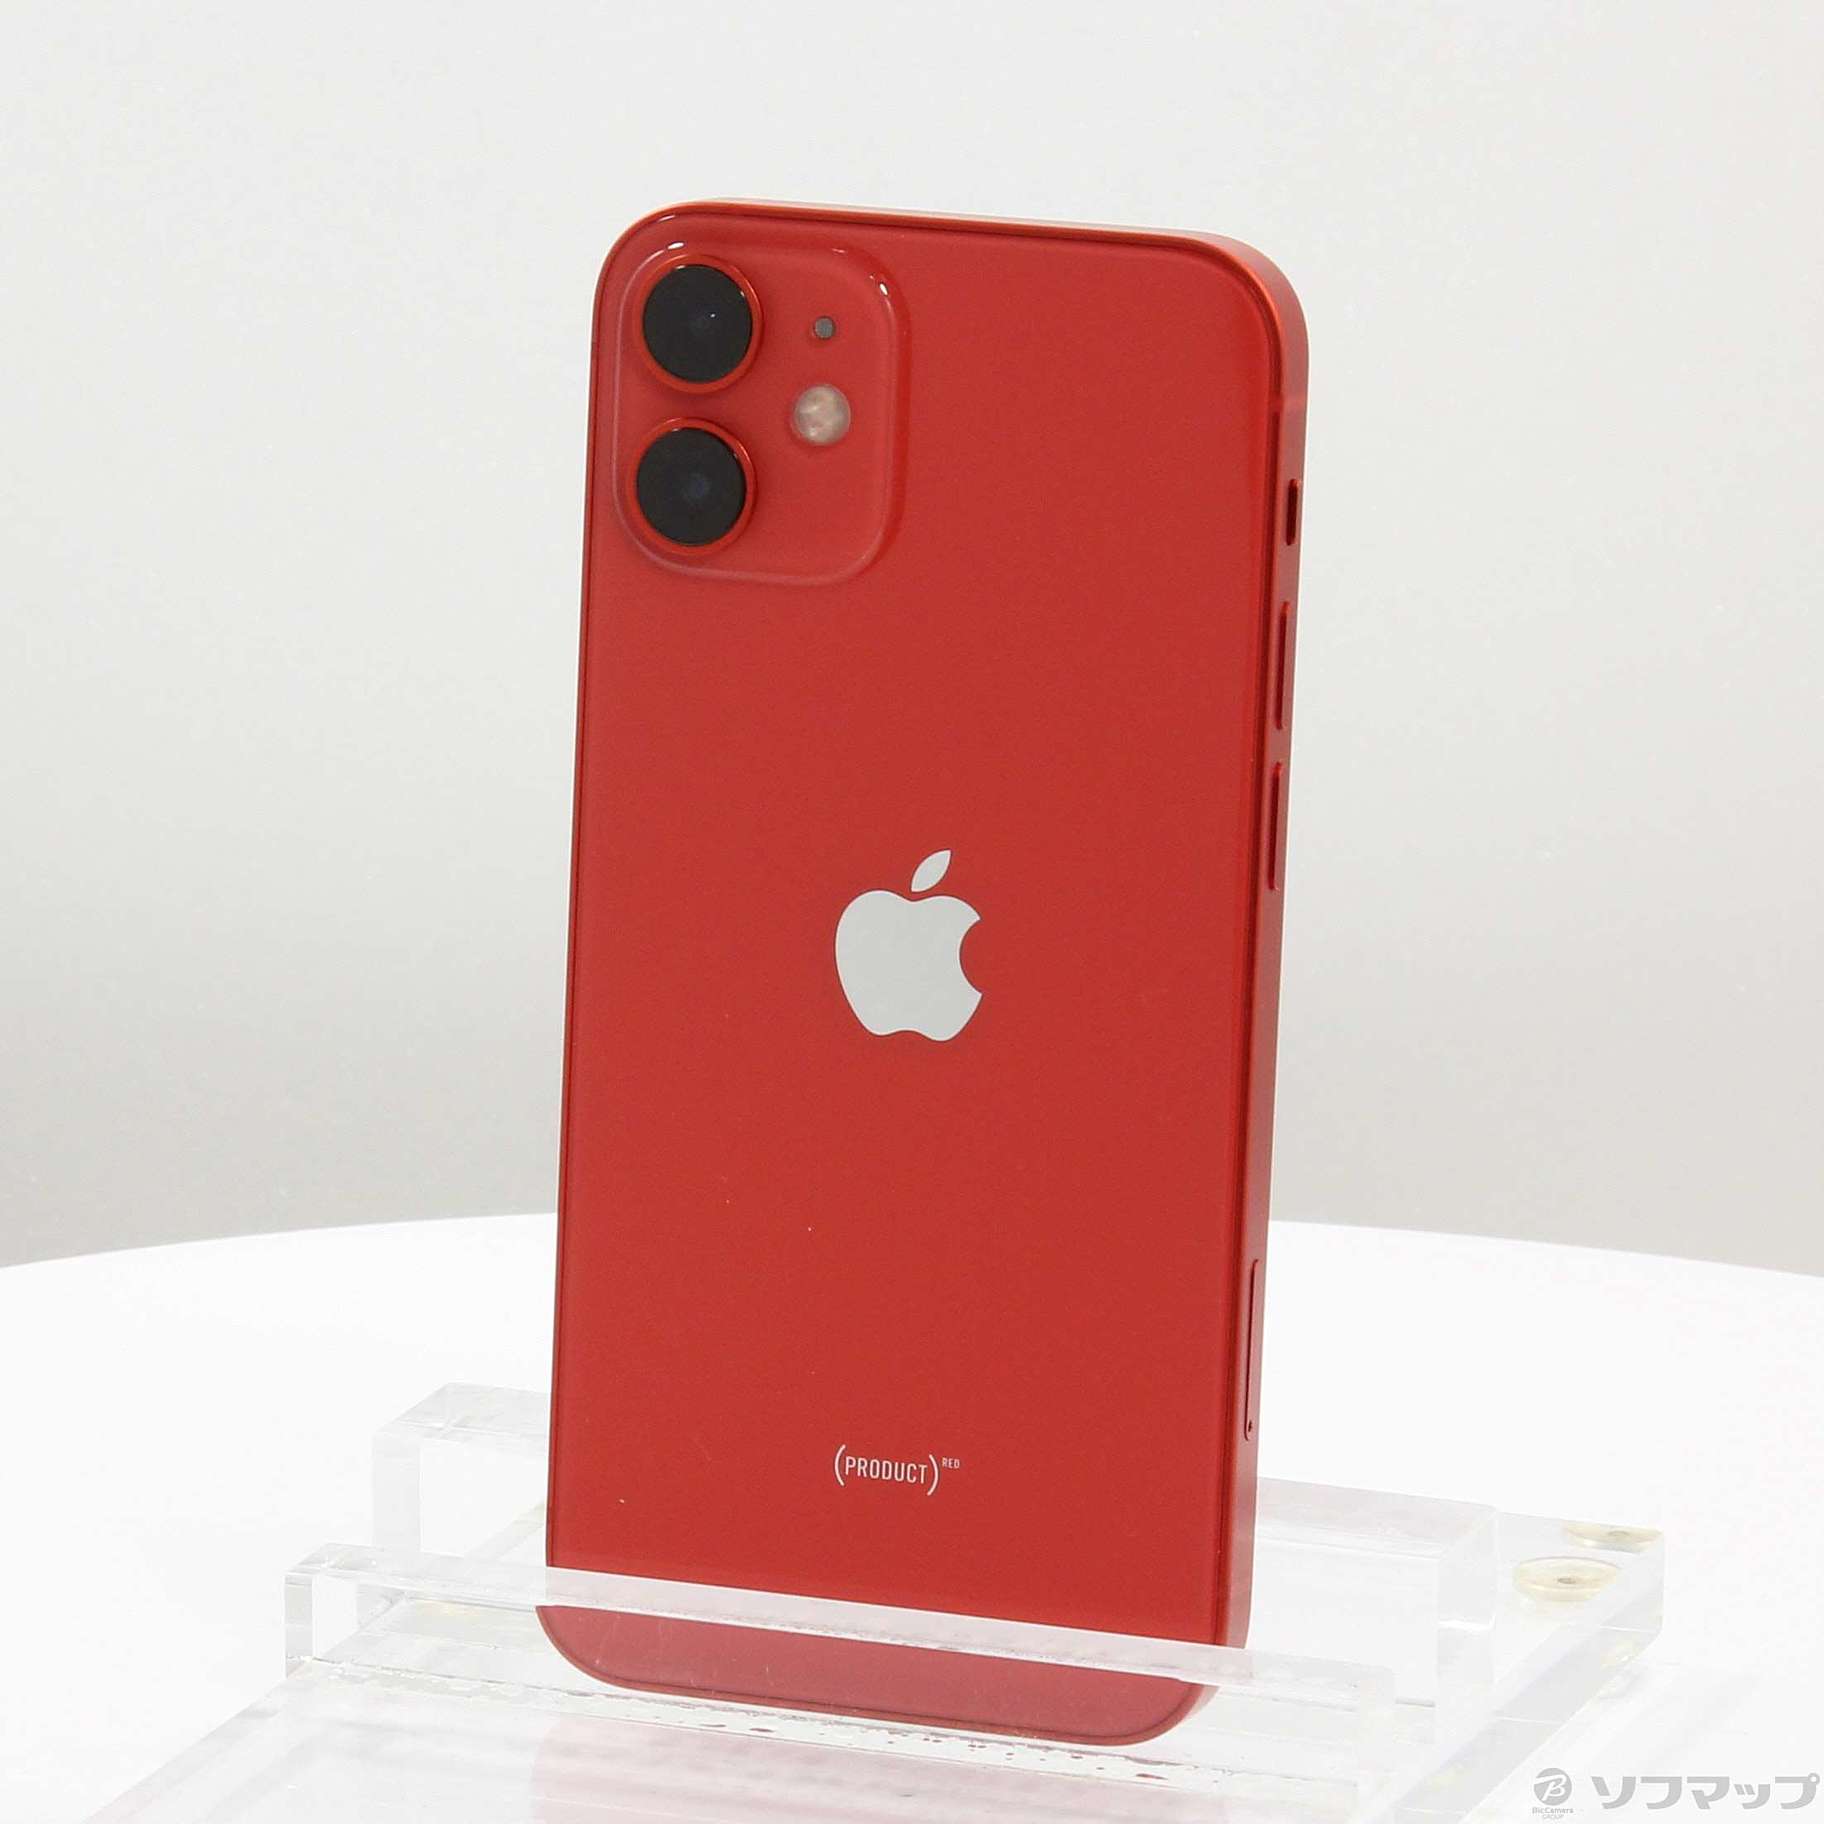 iPhone 12 mini (PRODUCT)RED 64GB SIMフリー [レッド] 中古(白ロム)価格比較 - 価格.com